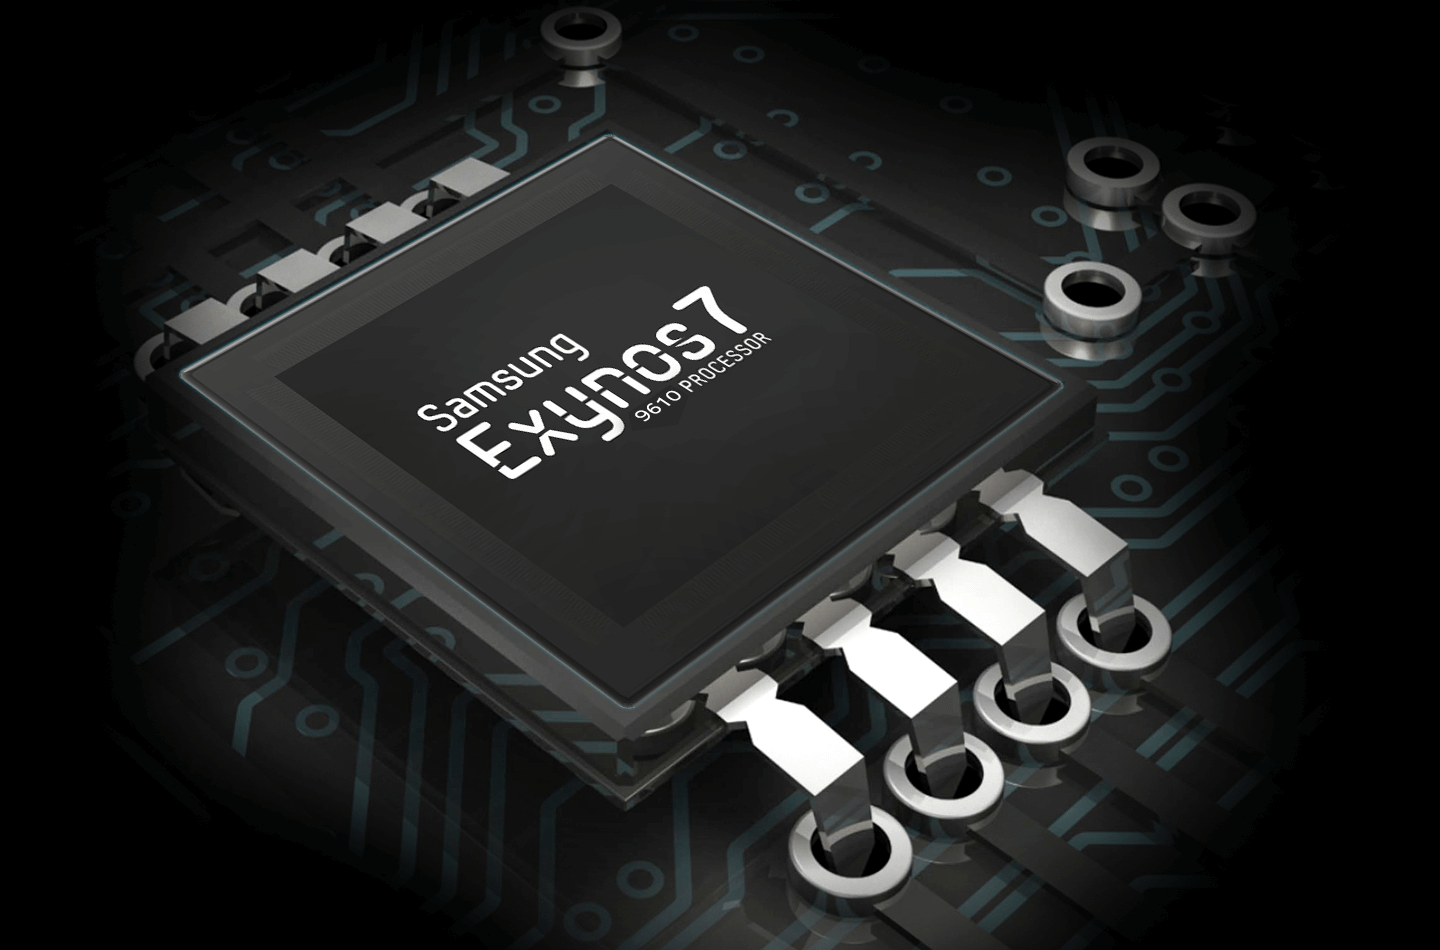 Samsung Exynos 7 series 9610 processor offers enhanced media performance